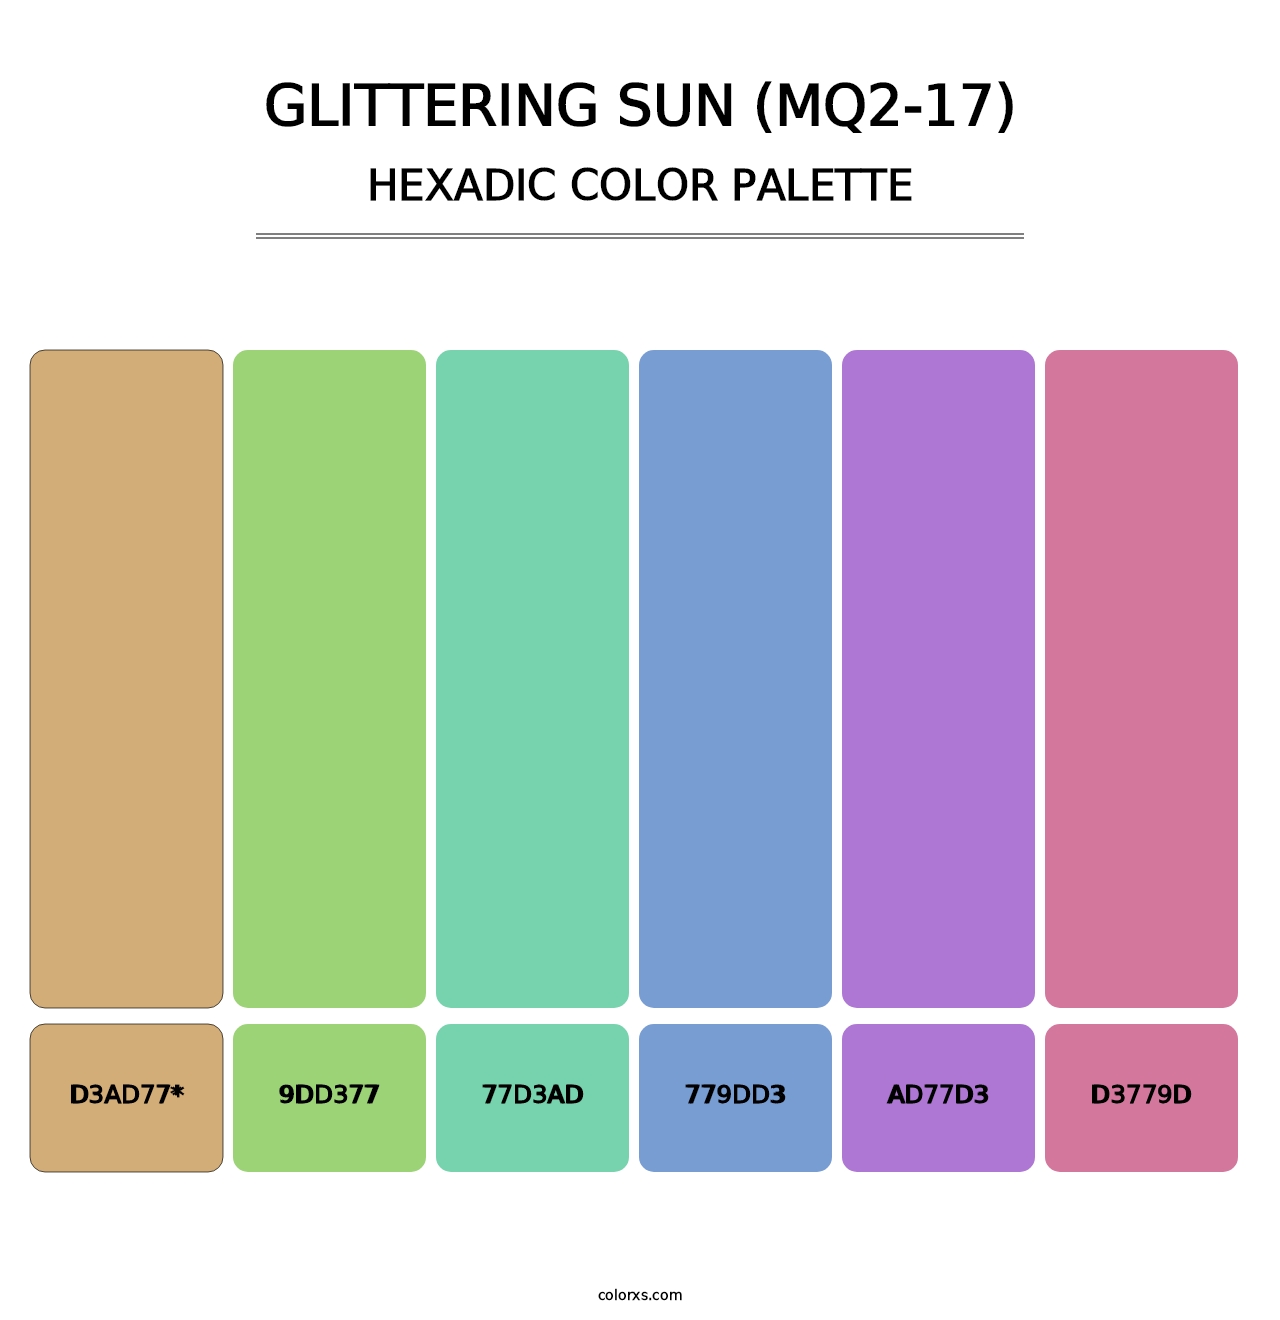 Glittering Sun (MQ2-17) - Hexadic Color Palette